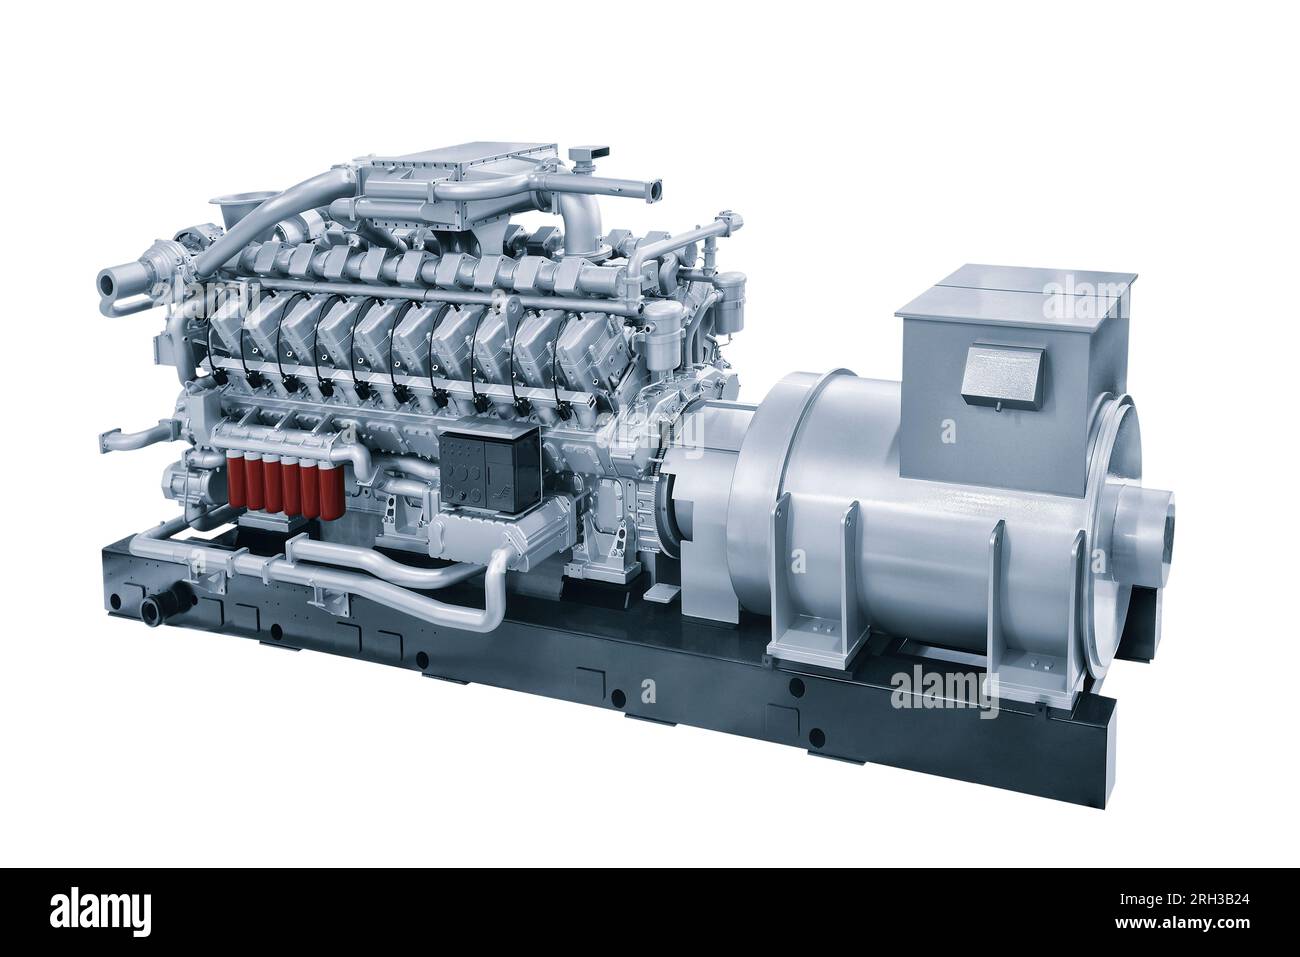 DE102007015147B4 - Segment piston hot gas engine for generating mechanical  energy - Google Patents